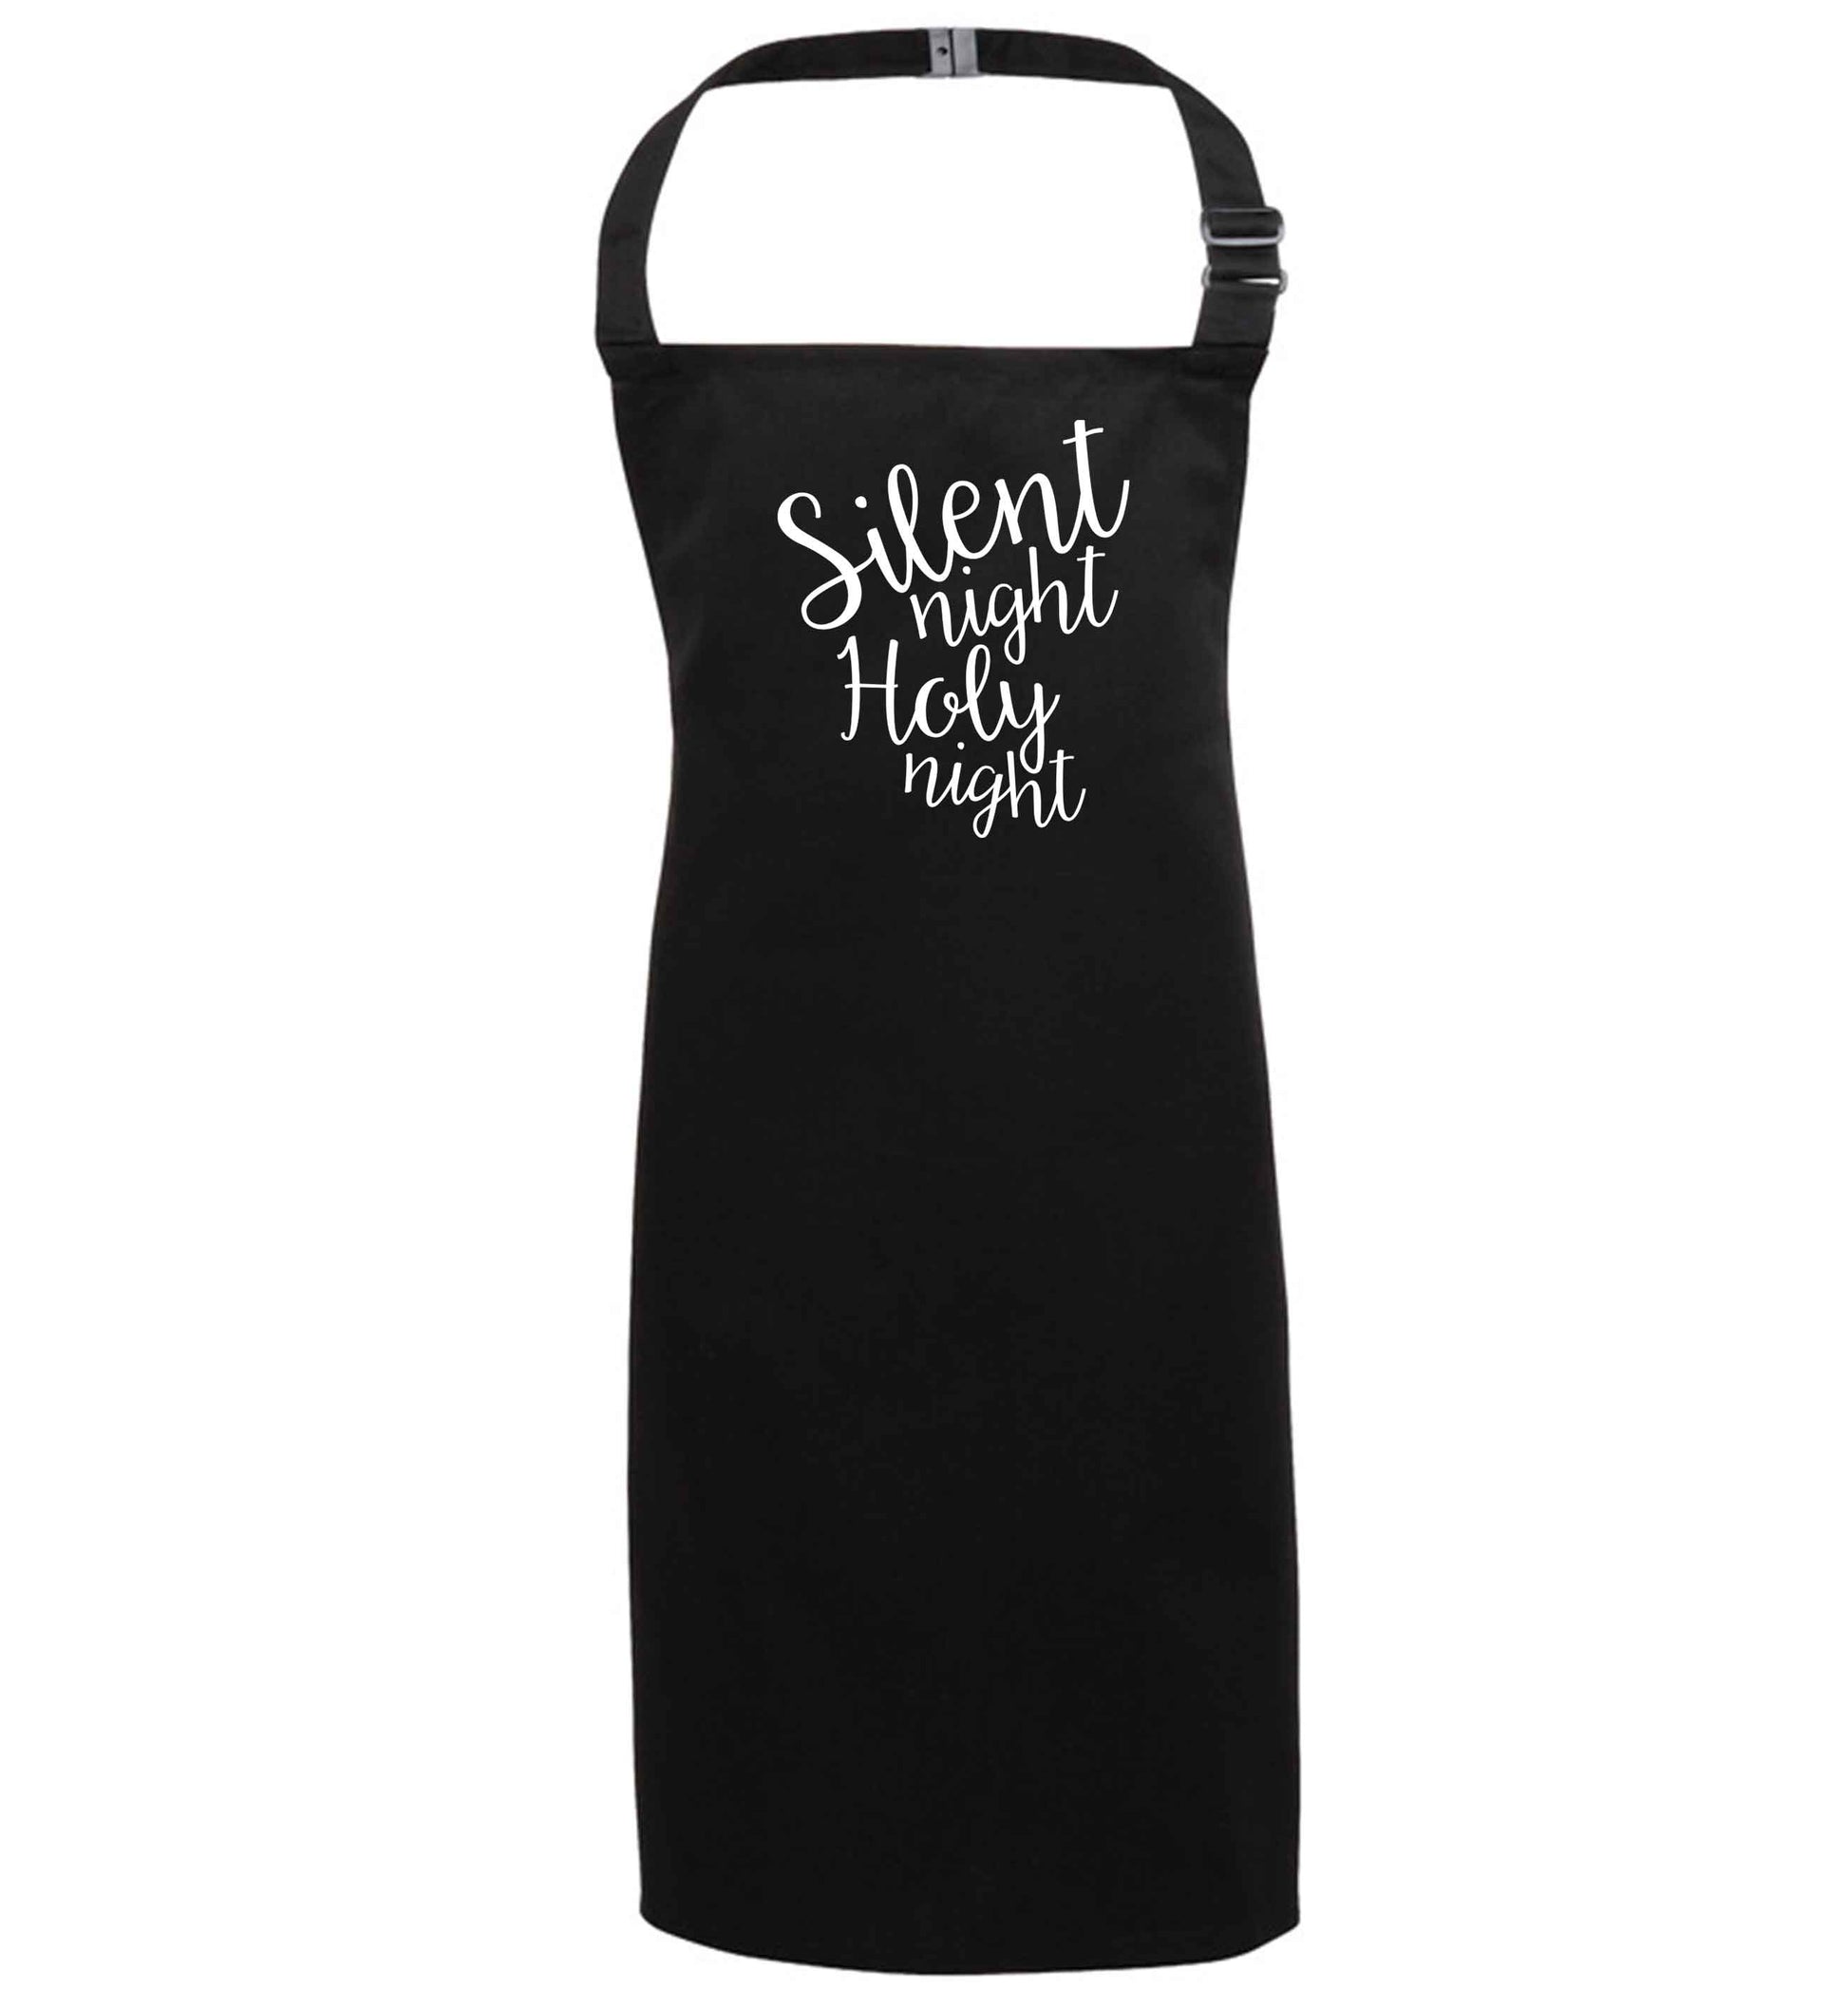 Silent night holy night black apron 7-10 years